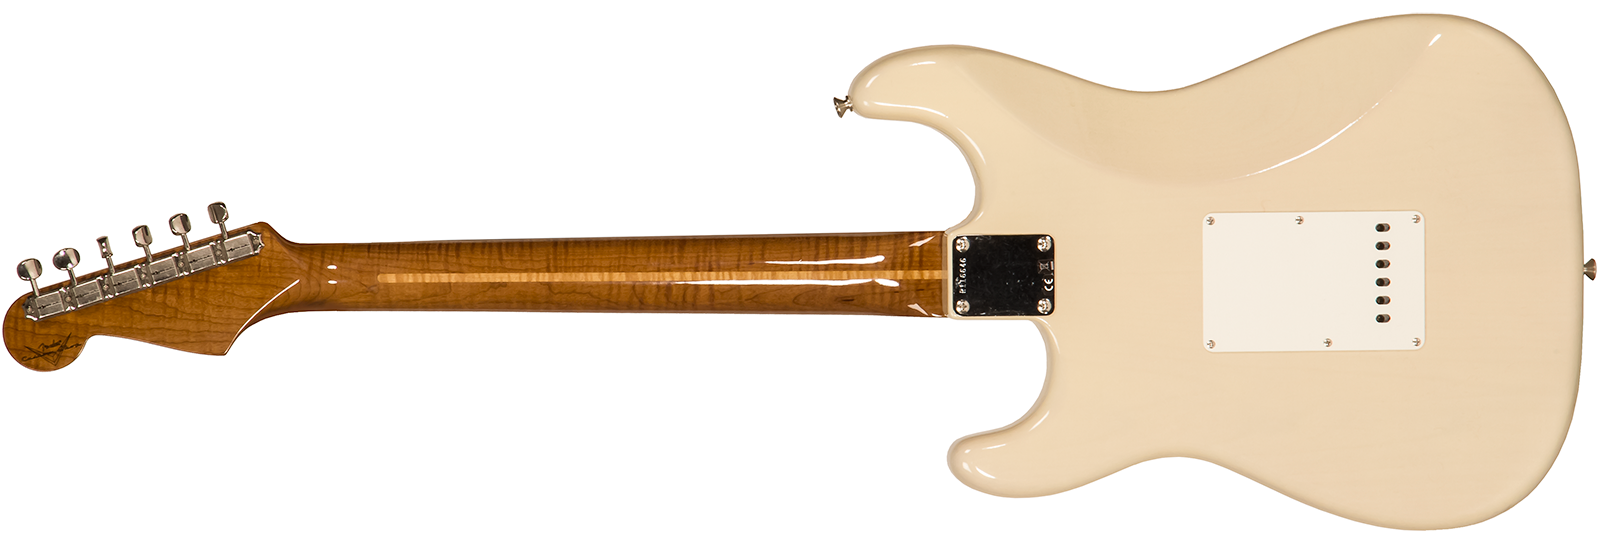 Fender Custom Shop Strat 1957 3s Trem Mn #r116646 - Lush Closet Classic Vintage Blonde - Str shape electric guitar - Variation 1